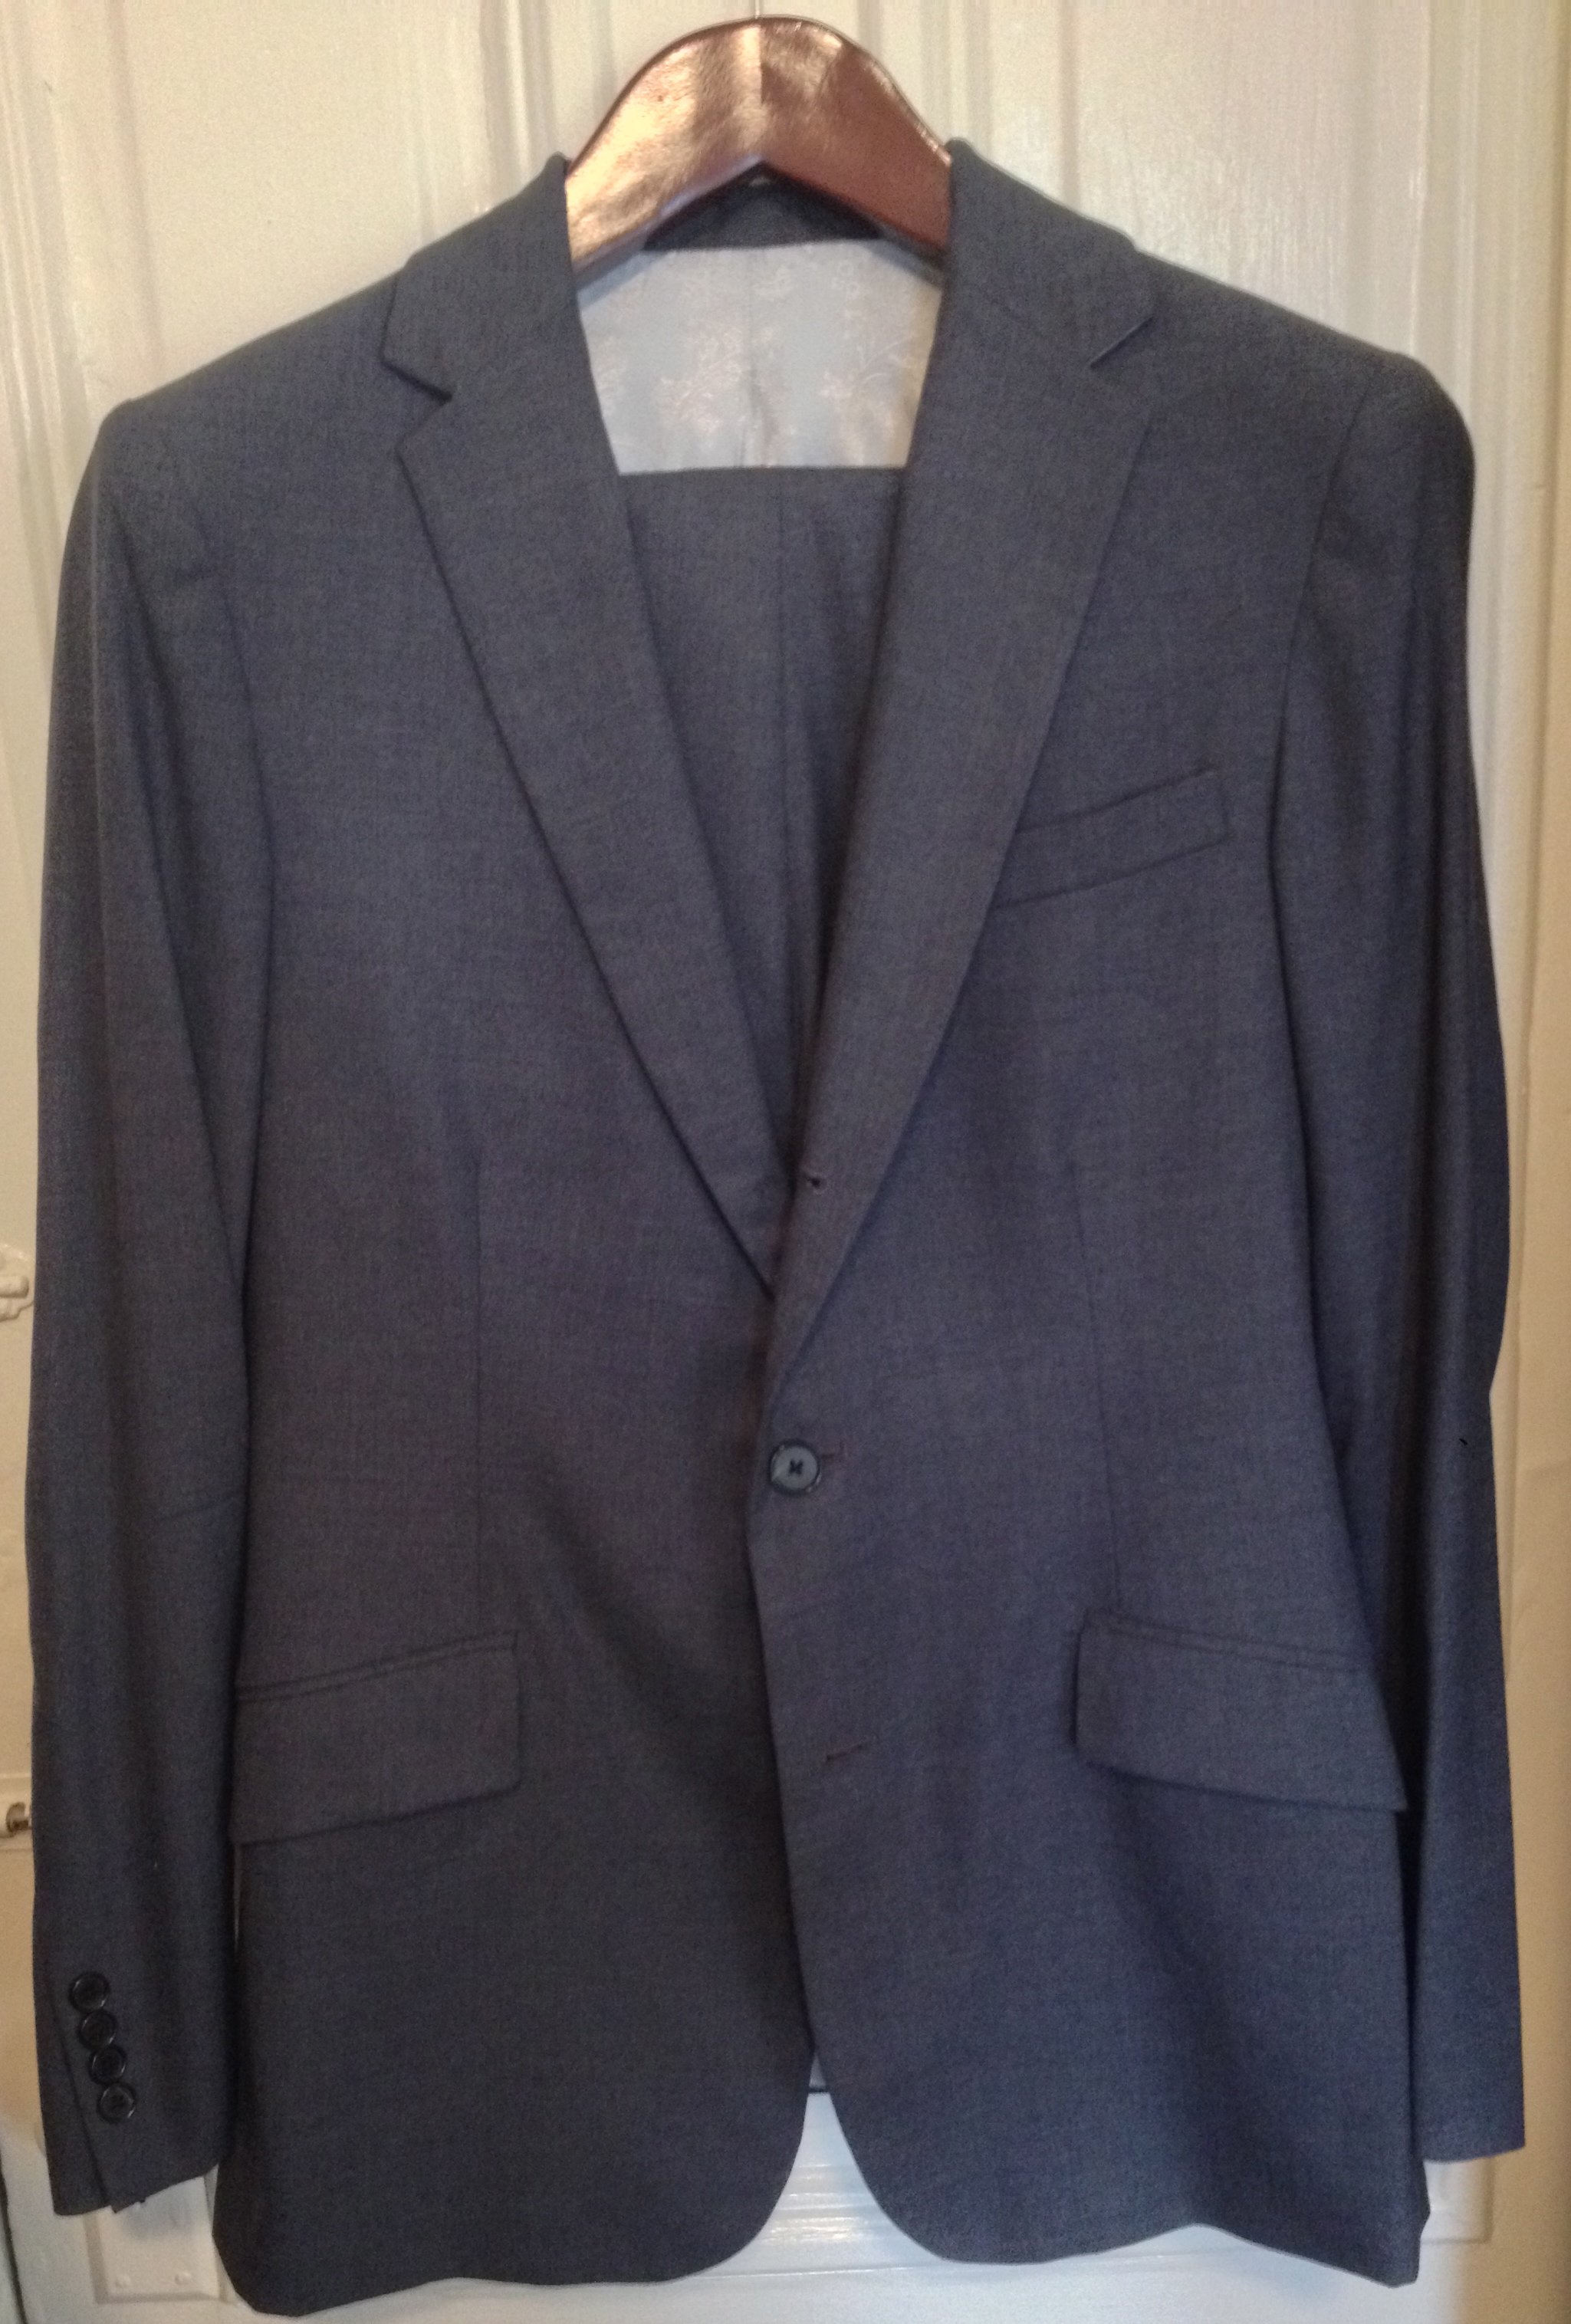 Epaulet Cadet Grey Suit | Styleforum